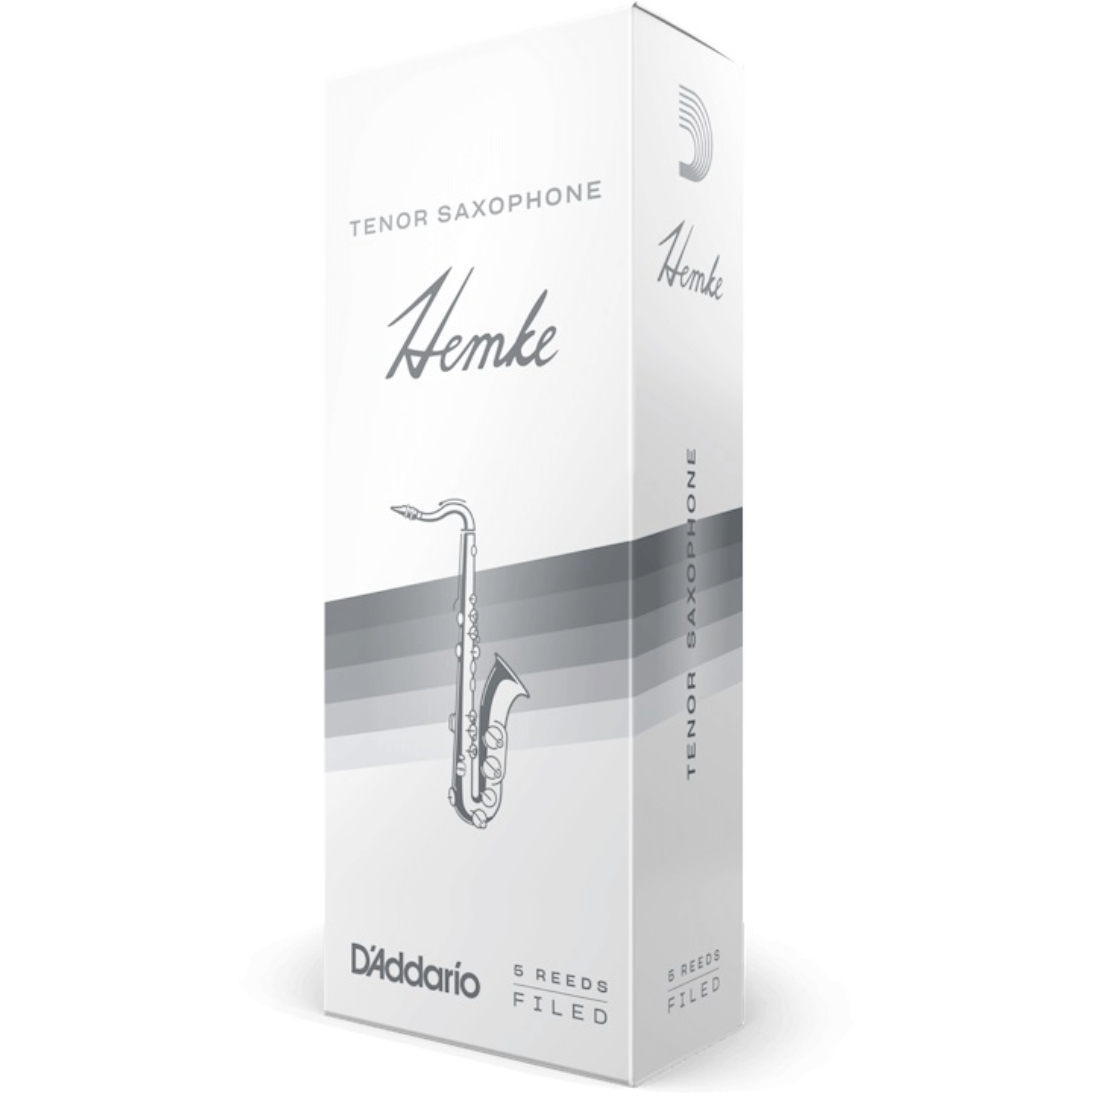 White and grey box of 5 Hemke tenor saxophone reeds - strength of 2.5